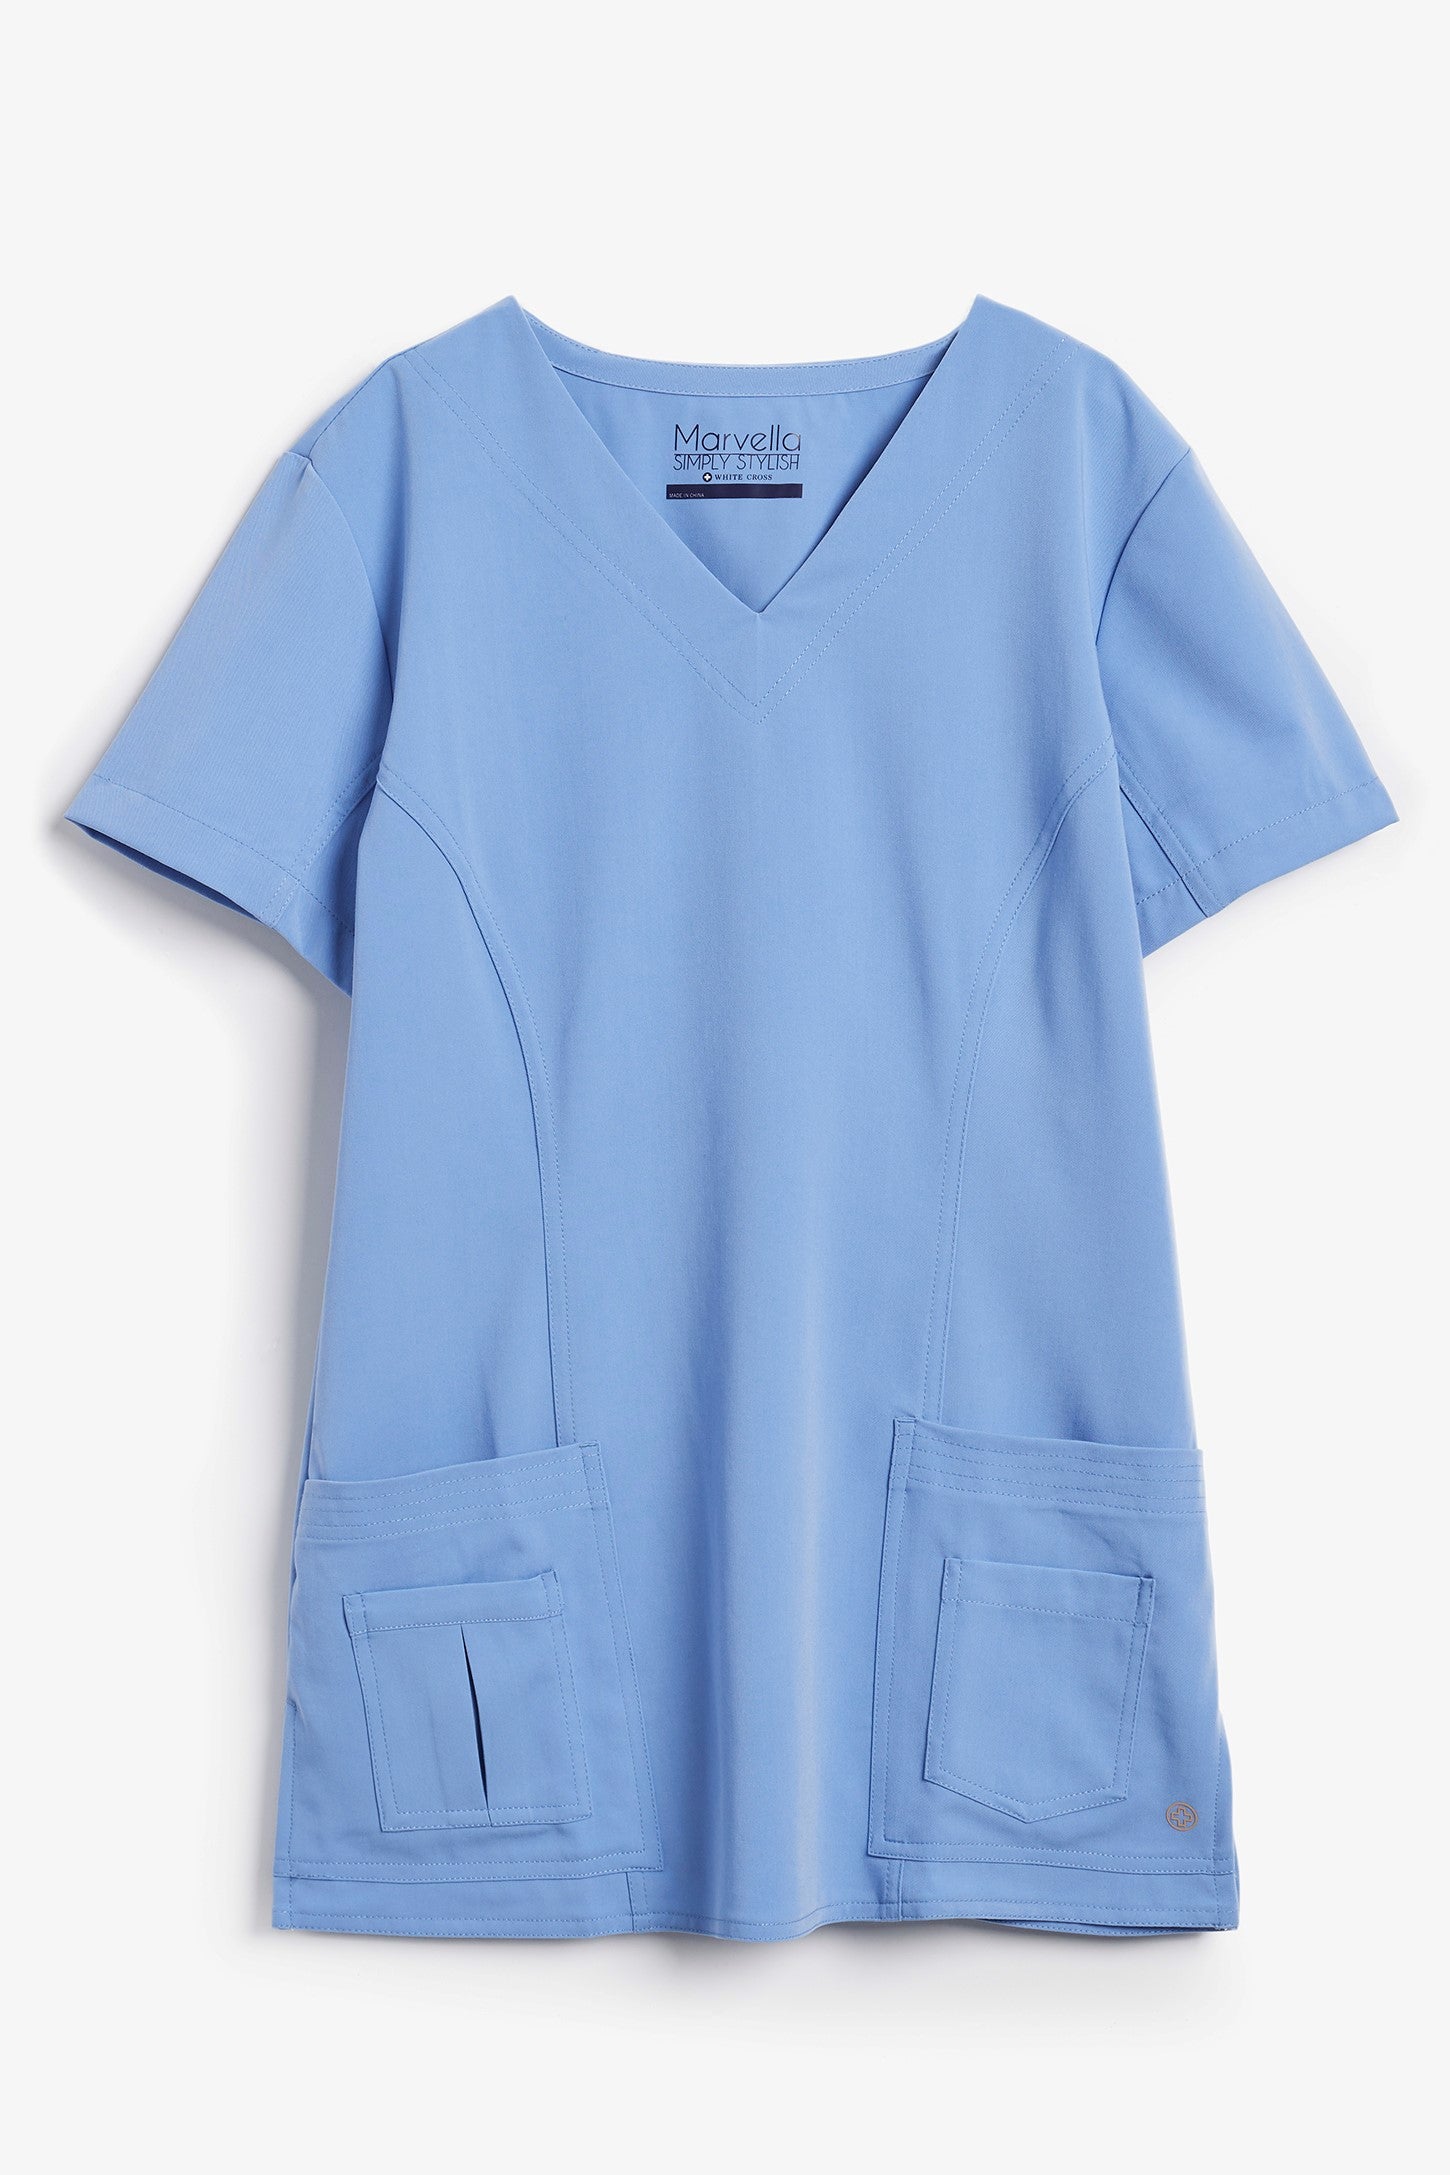 Haut uniforme infirmière - Femme && BLEU CIEL